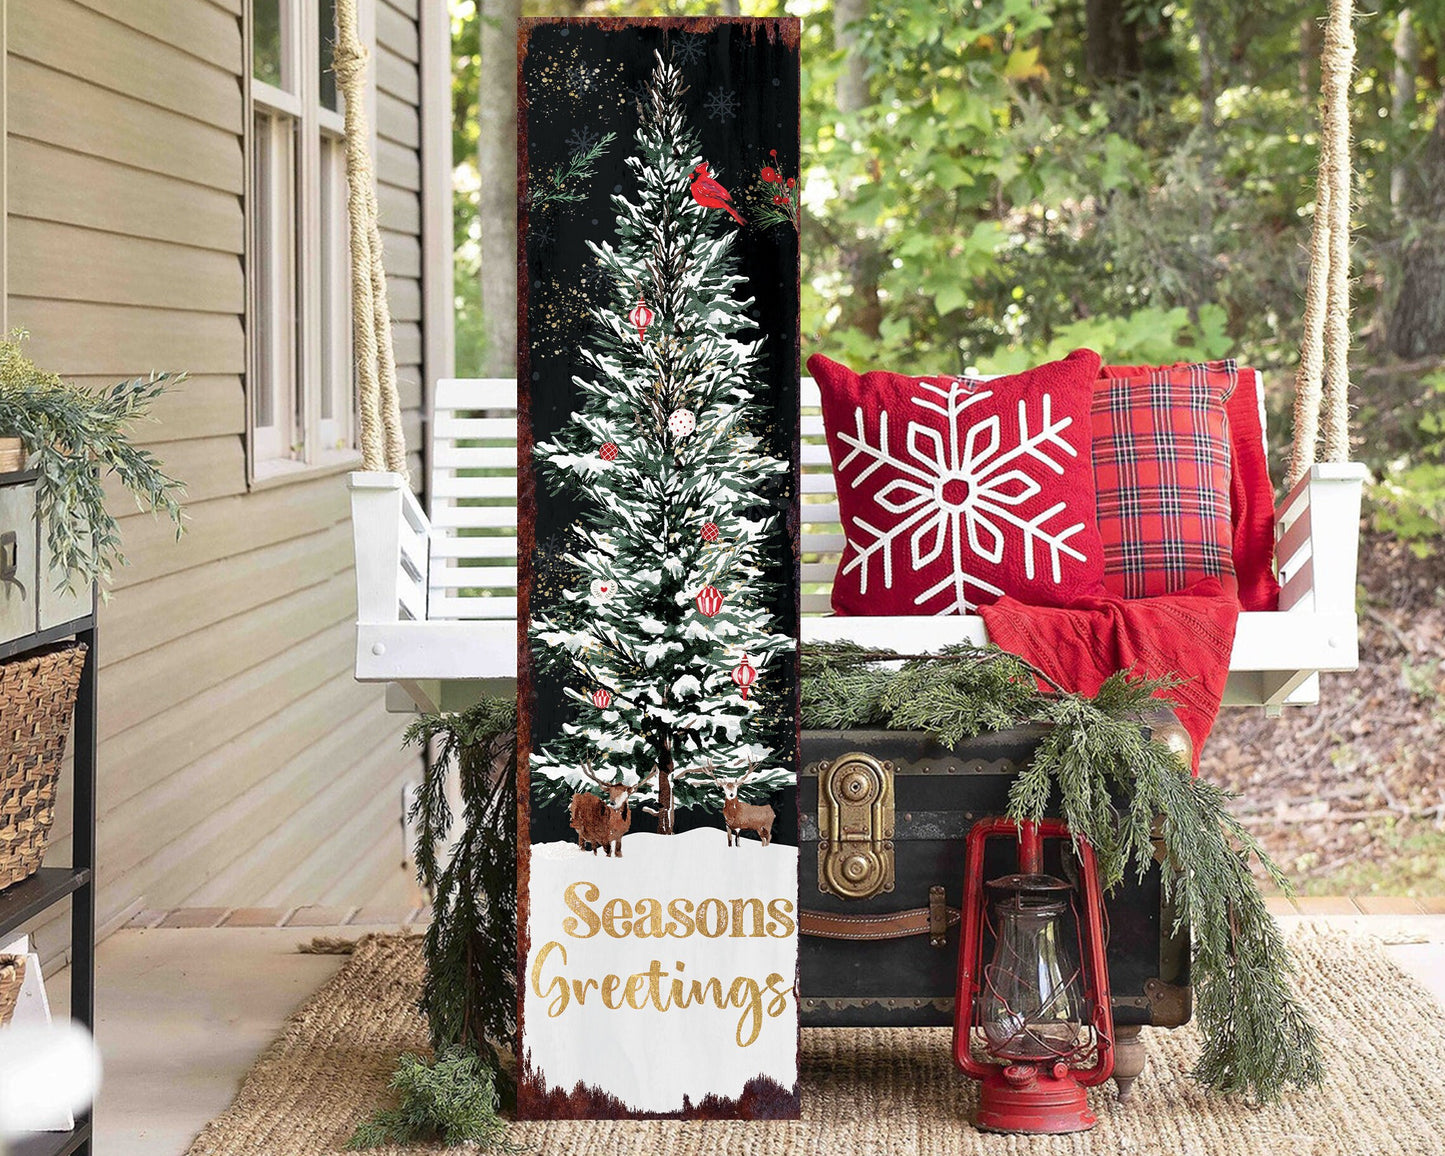 36in Seasons Greetings Christmas Sign - Vintage Holiday Decor, Christmas Porch Decor, Vintage Reindeer Sign, Outdoor Holiday Christmas Decor